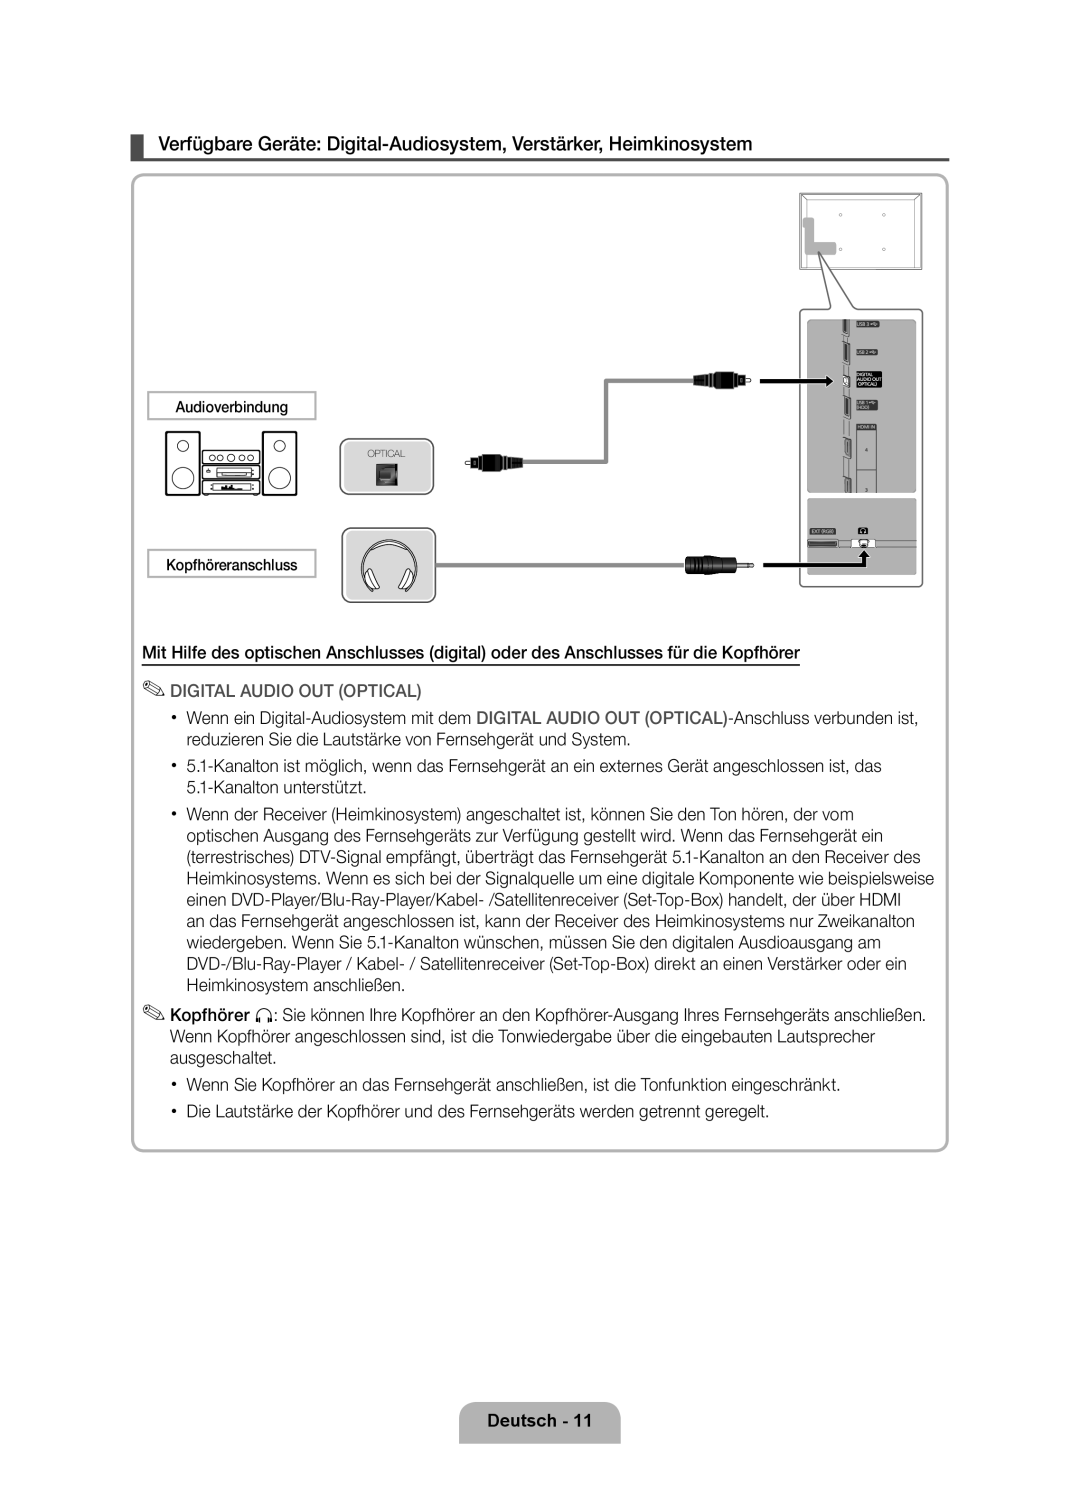 Samsung UE37D6540USXZG manual Verfügbare Geräte Digital-Audiosystem, Verstärker, Heimkinosystem, Digital Audio Out Optical 